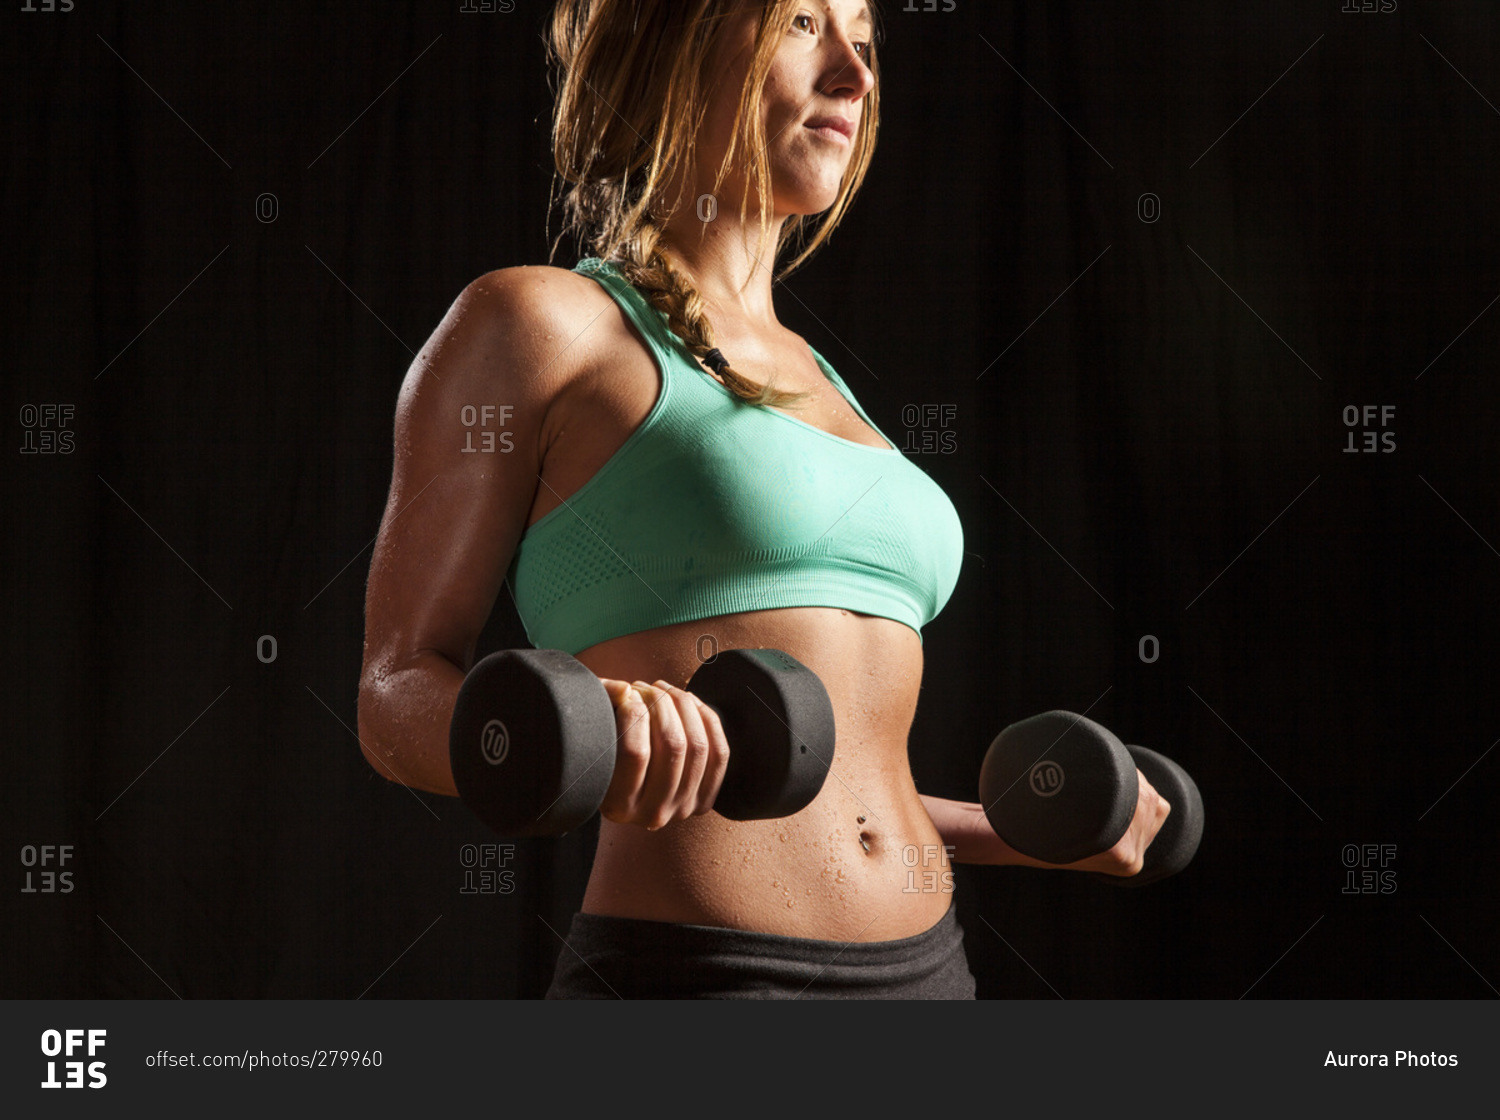 Woman lifting hand weights